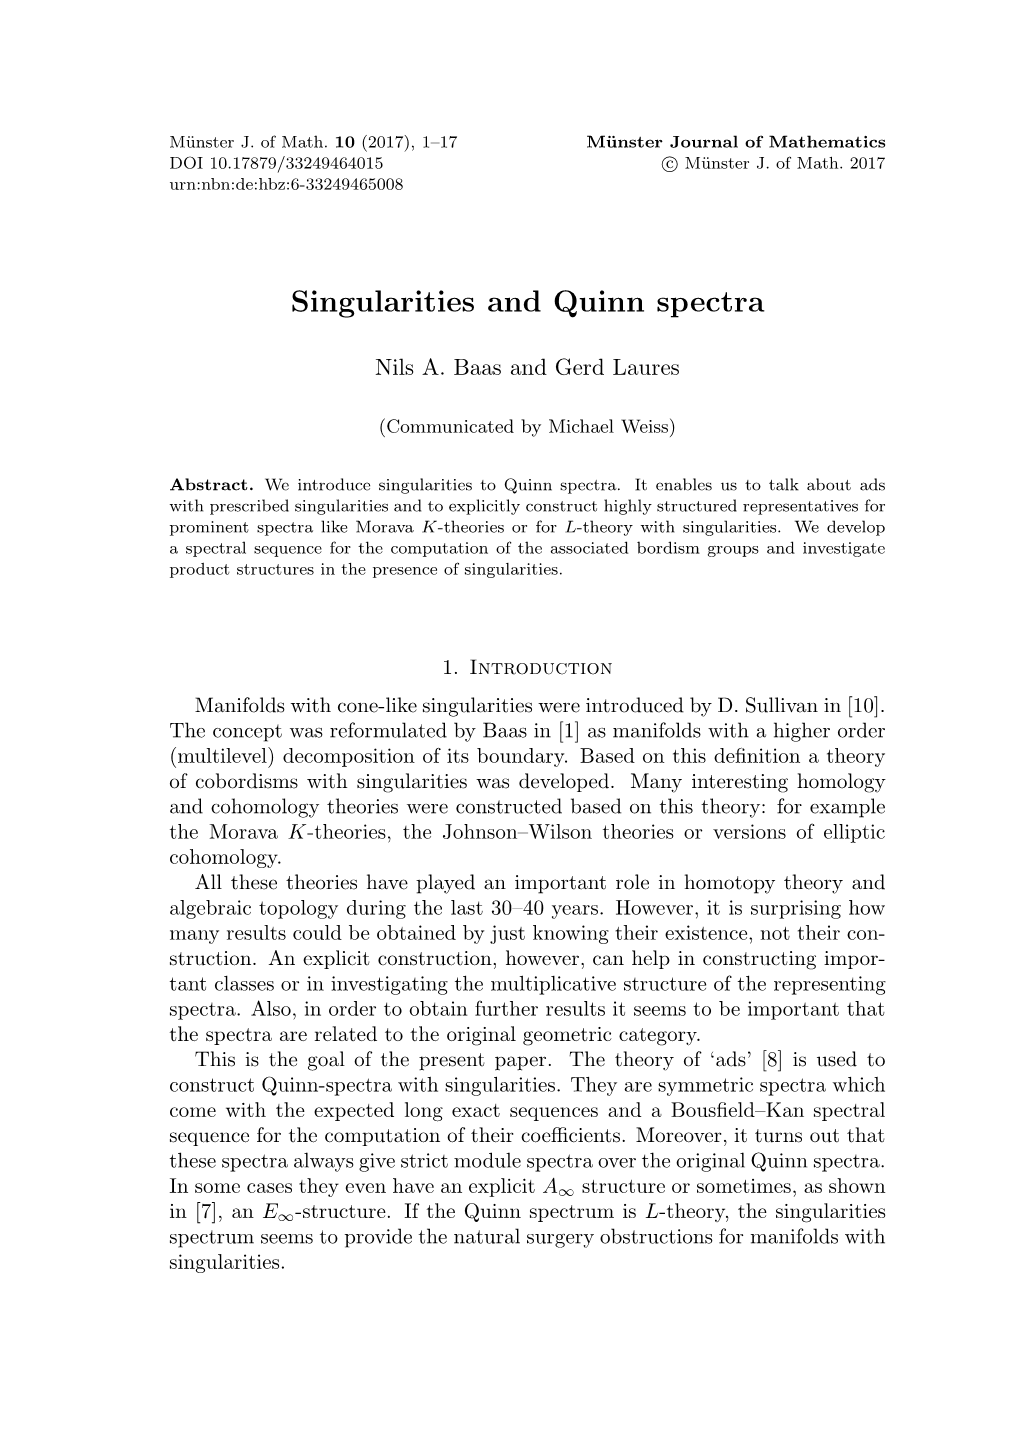 Singularities and Quinn Spectra